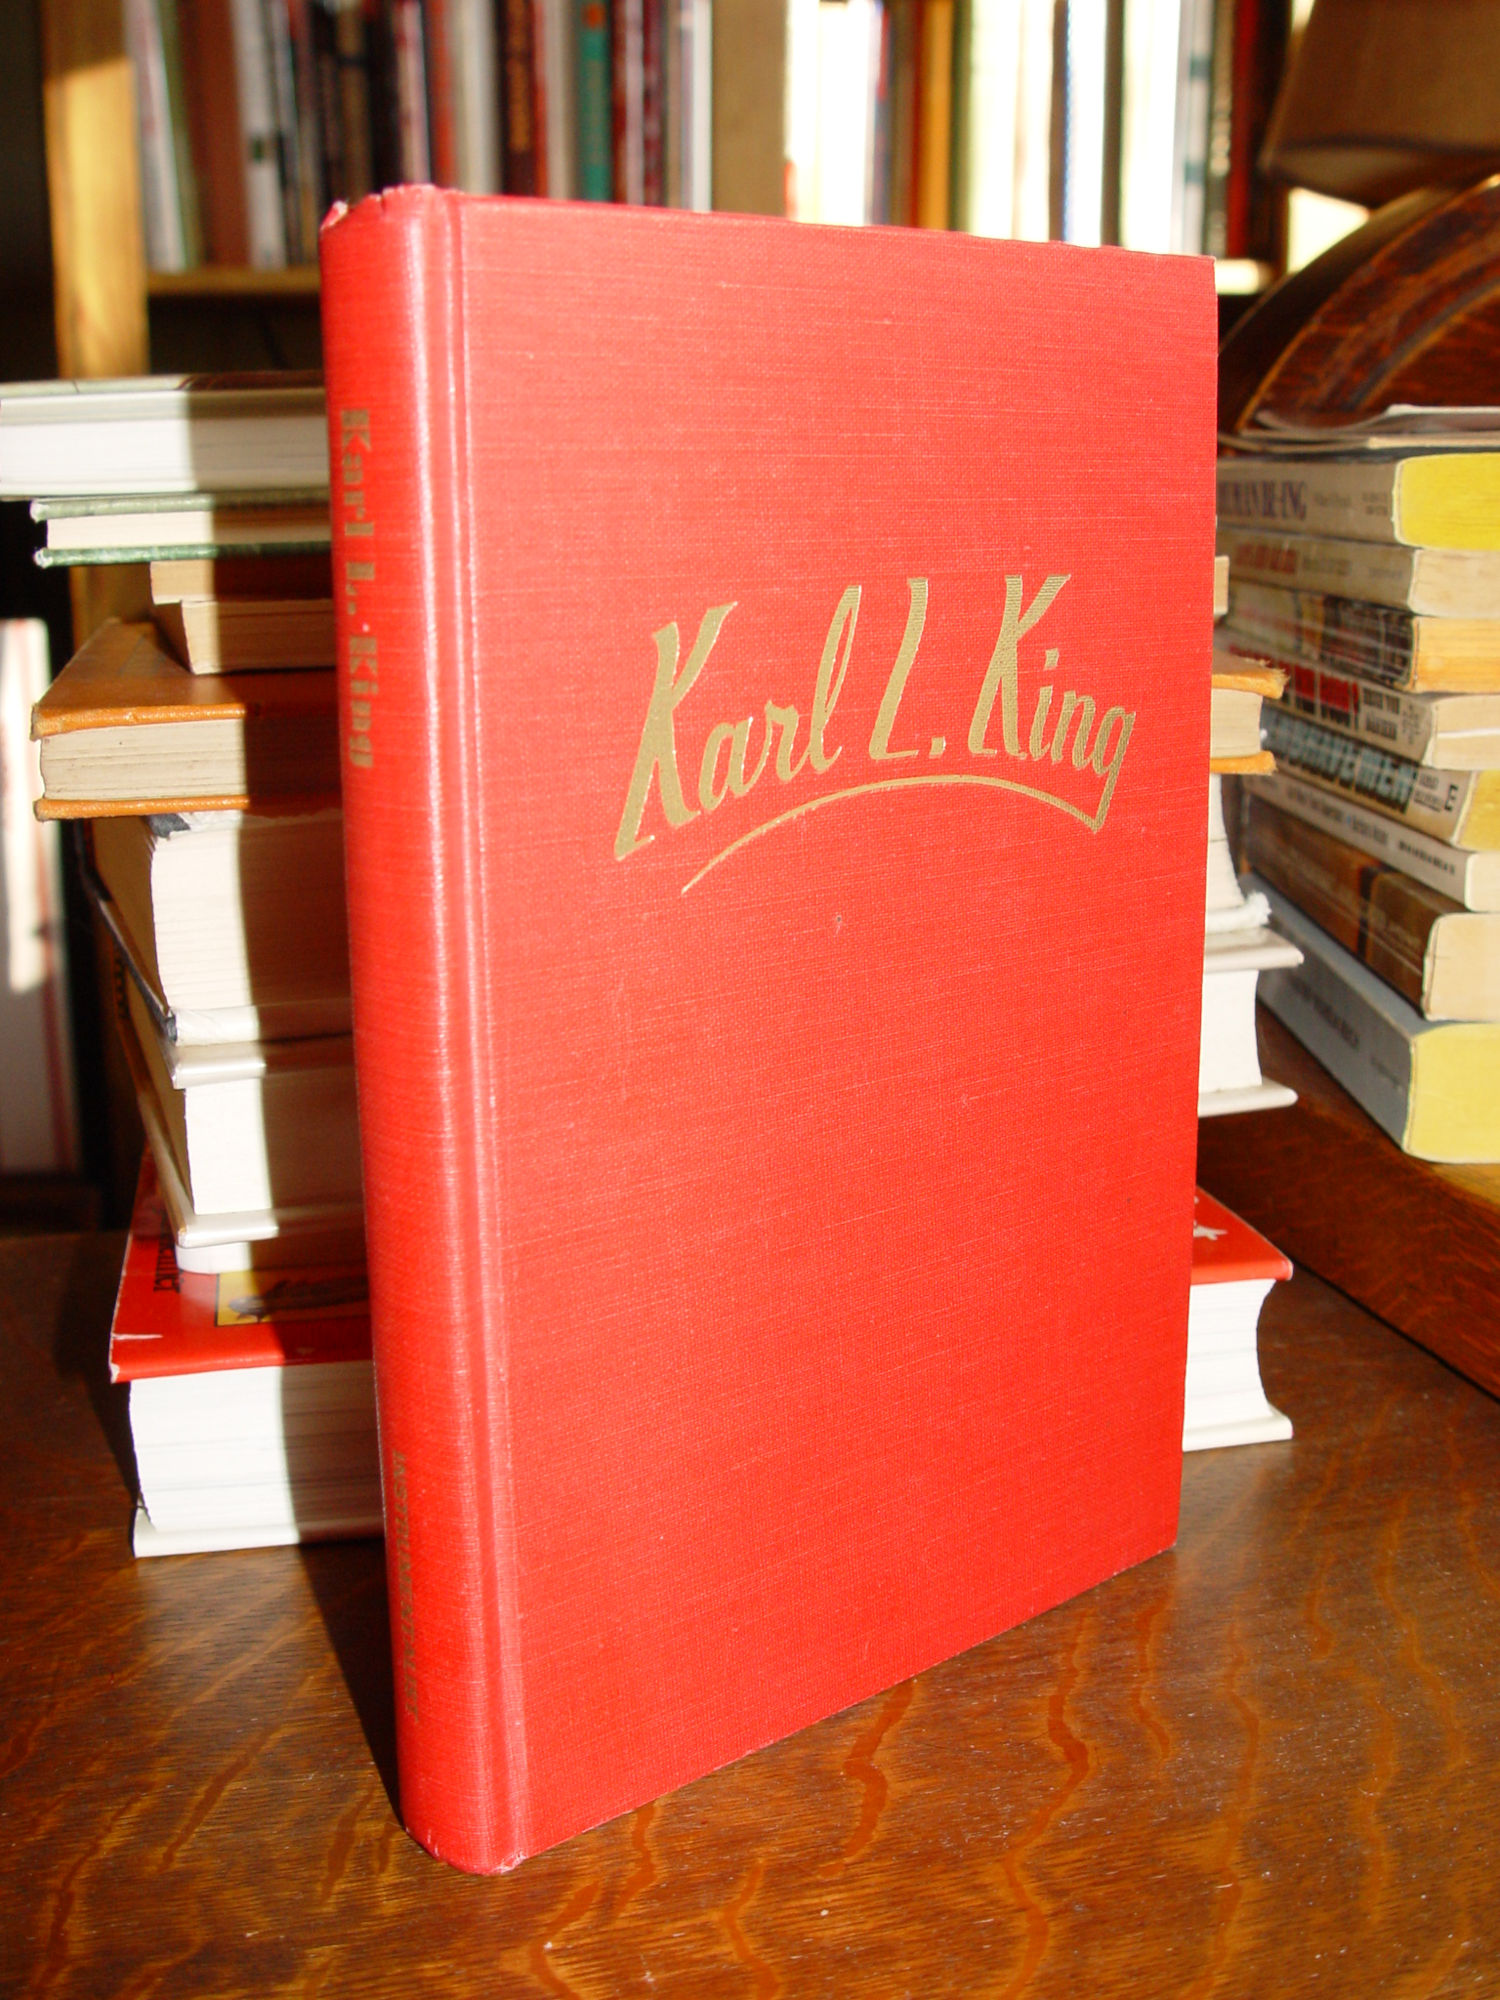 Karl L. King: An American bandmaster 1975
                        by Thomas J Hatton